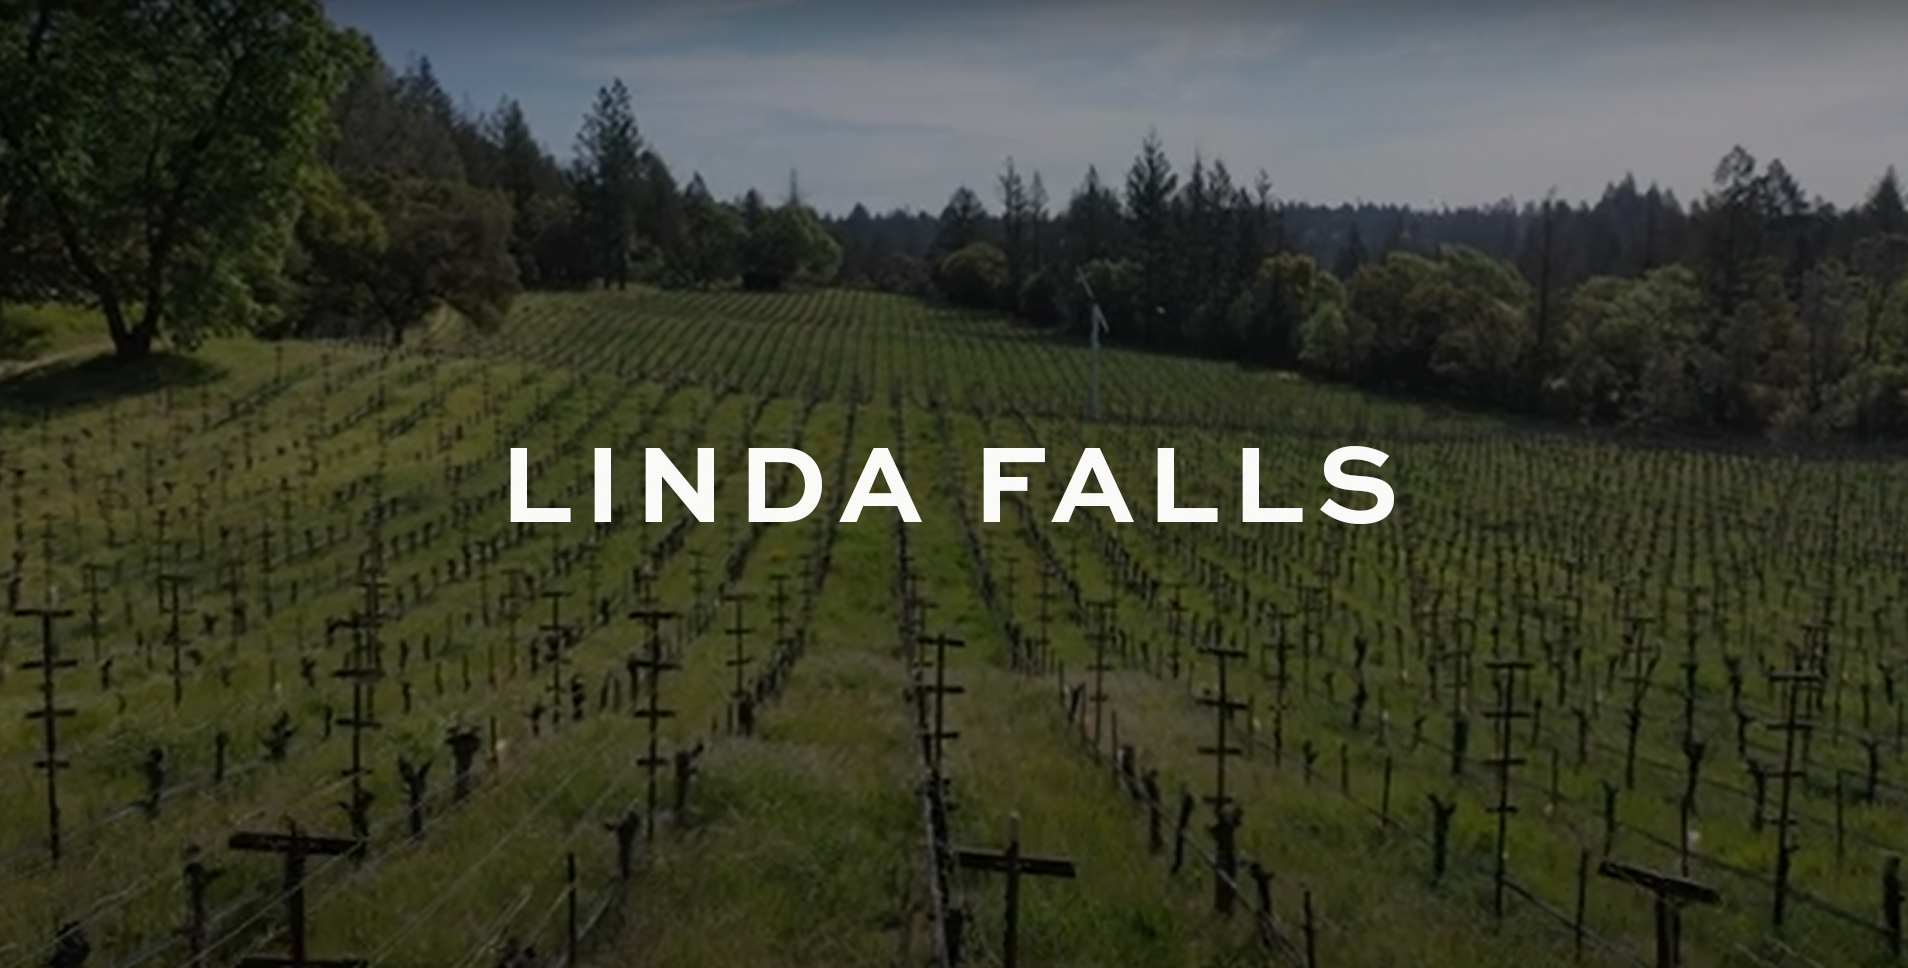 Heitz Cellar Howell Mountain Linda Falls Vineyard with text "Linda Falls" overlayed